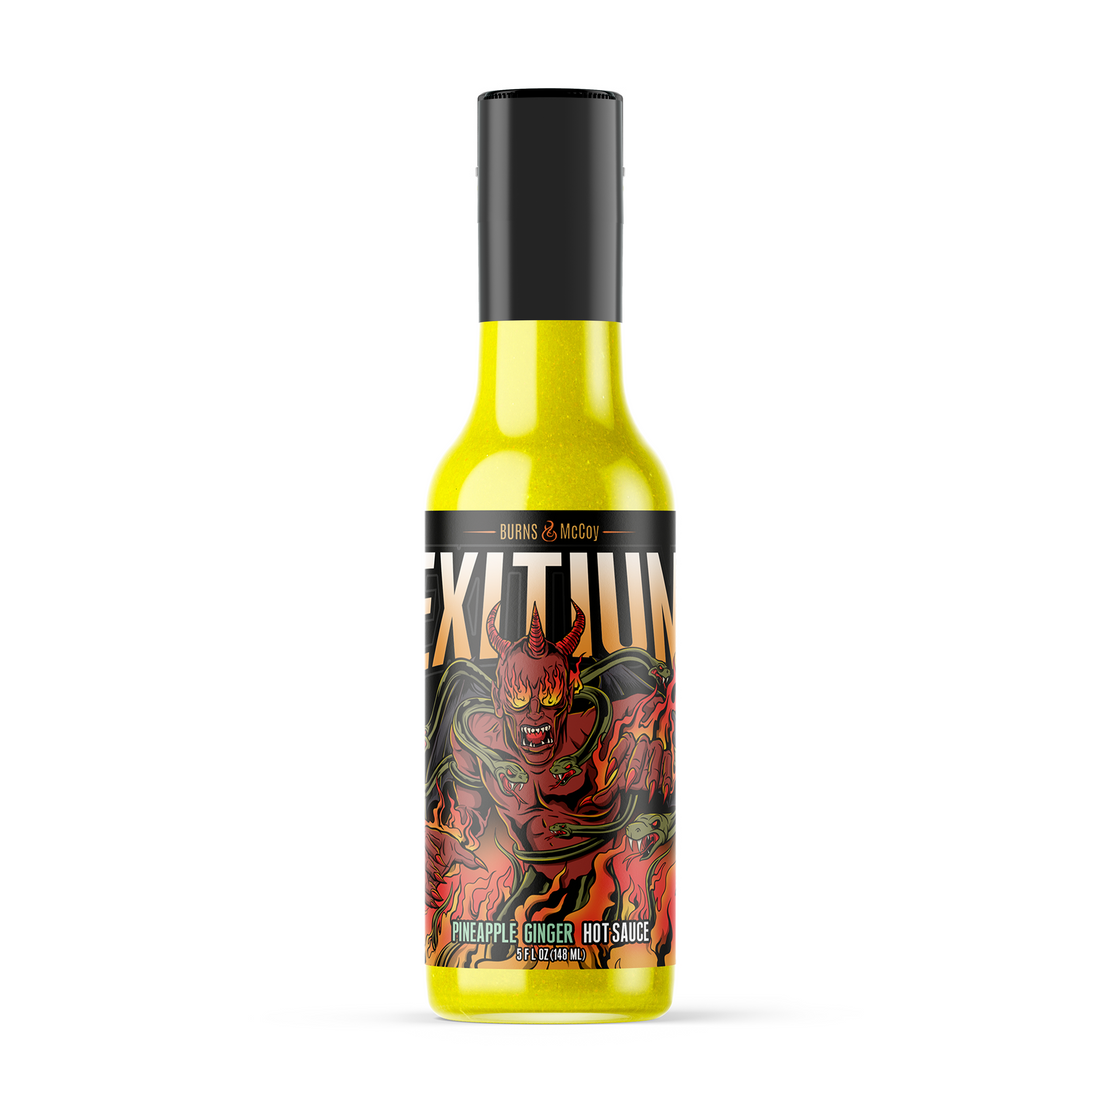 Exitium-Pineapple Ginger Hot Sauce